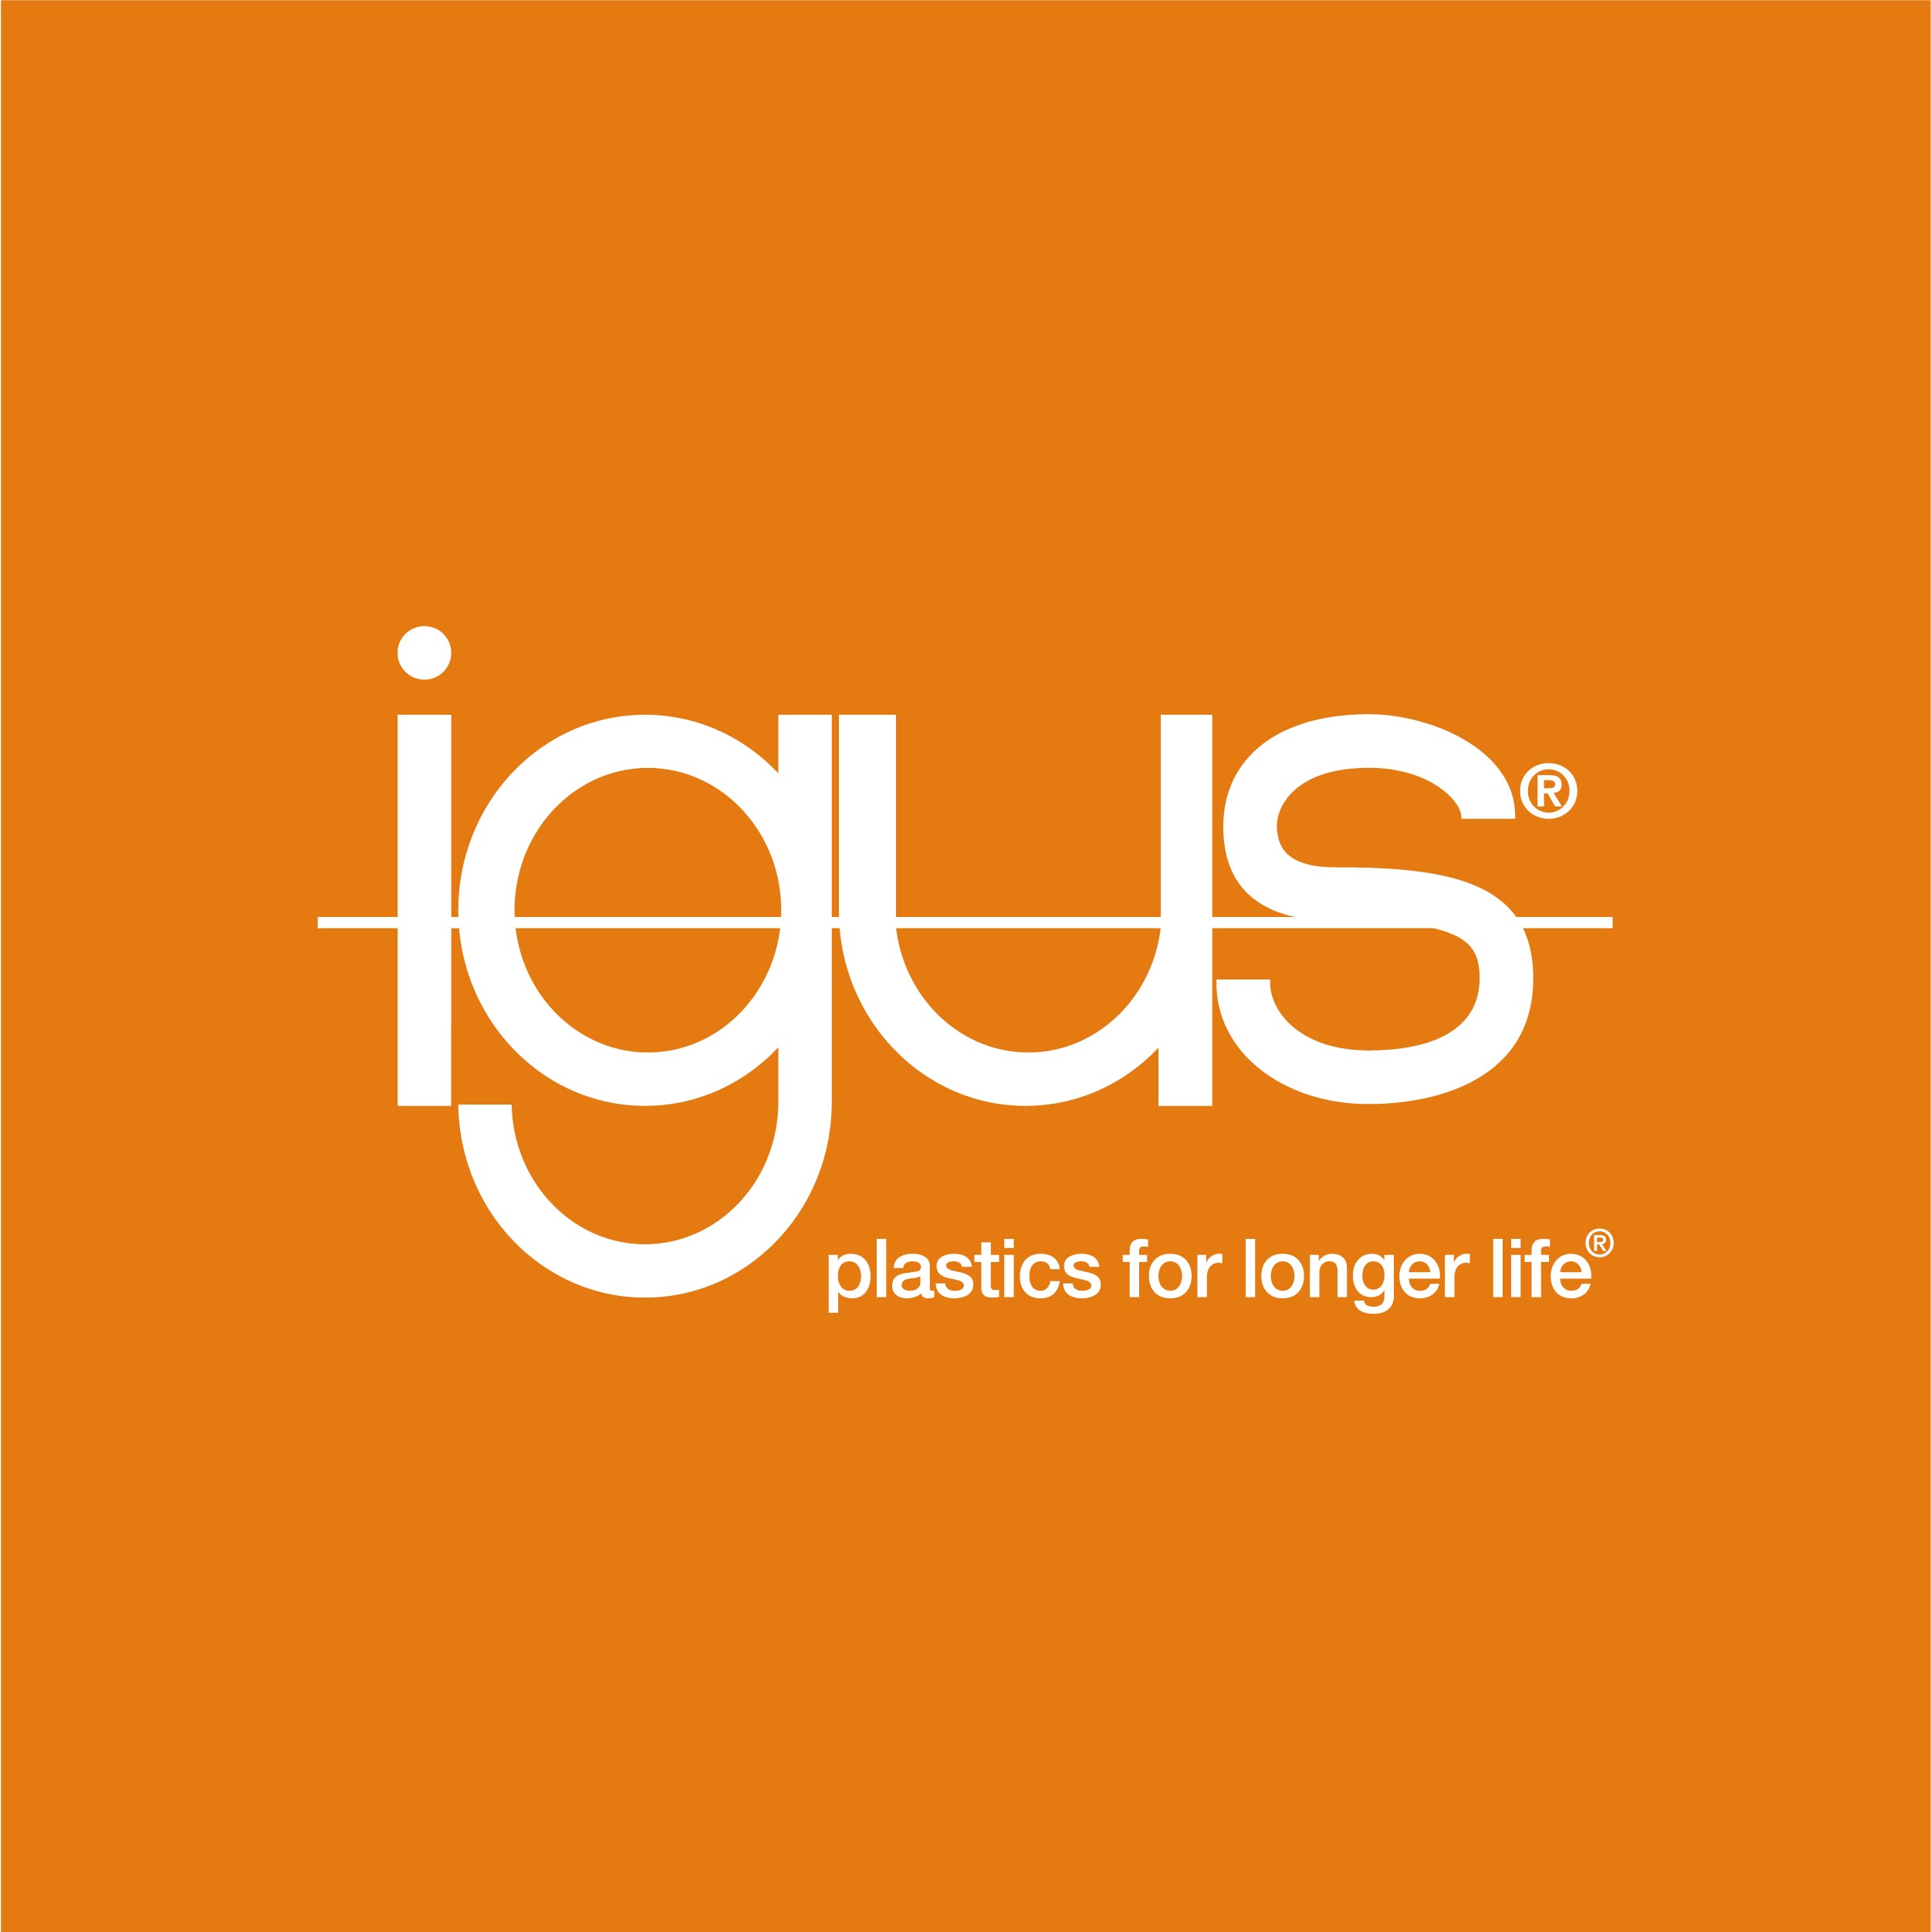 igus.plastics for longer life_網頁用小_橘底.jpg